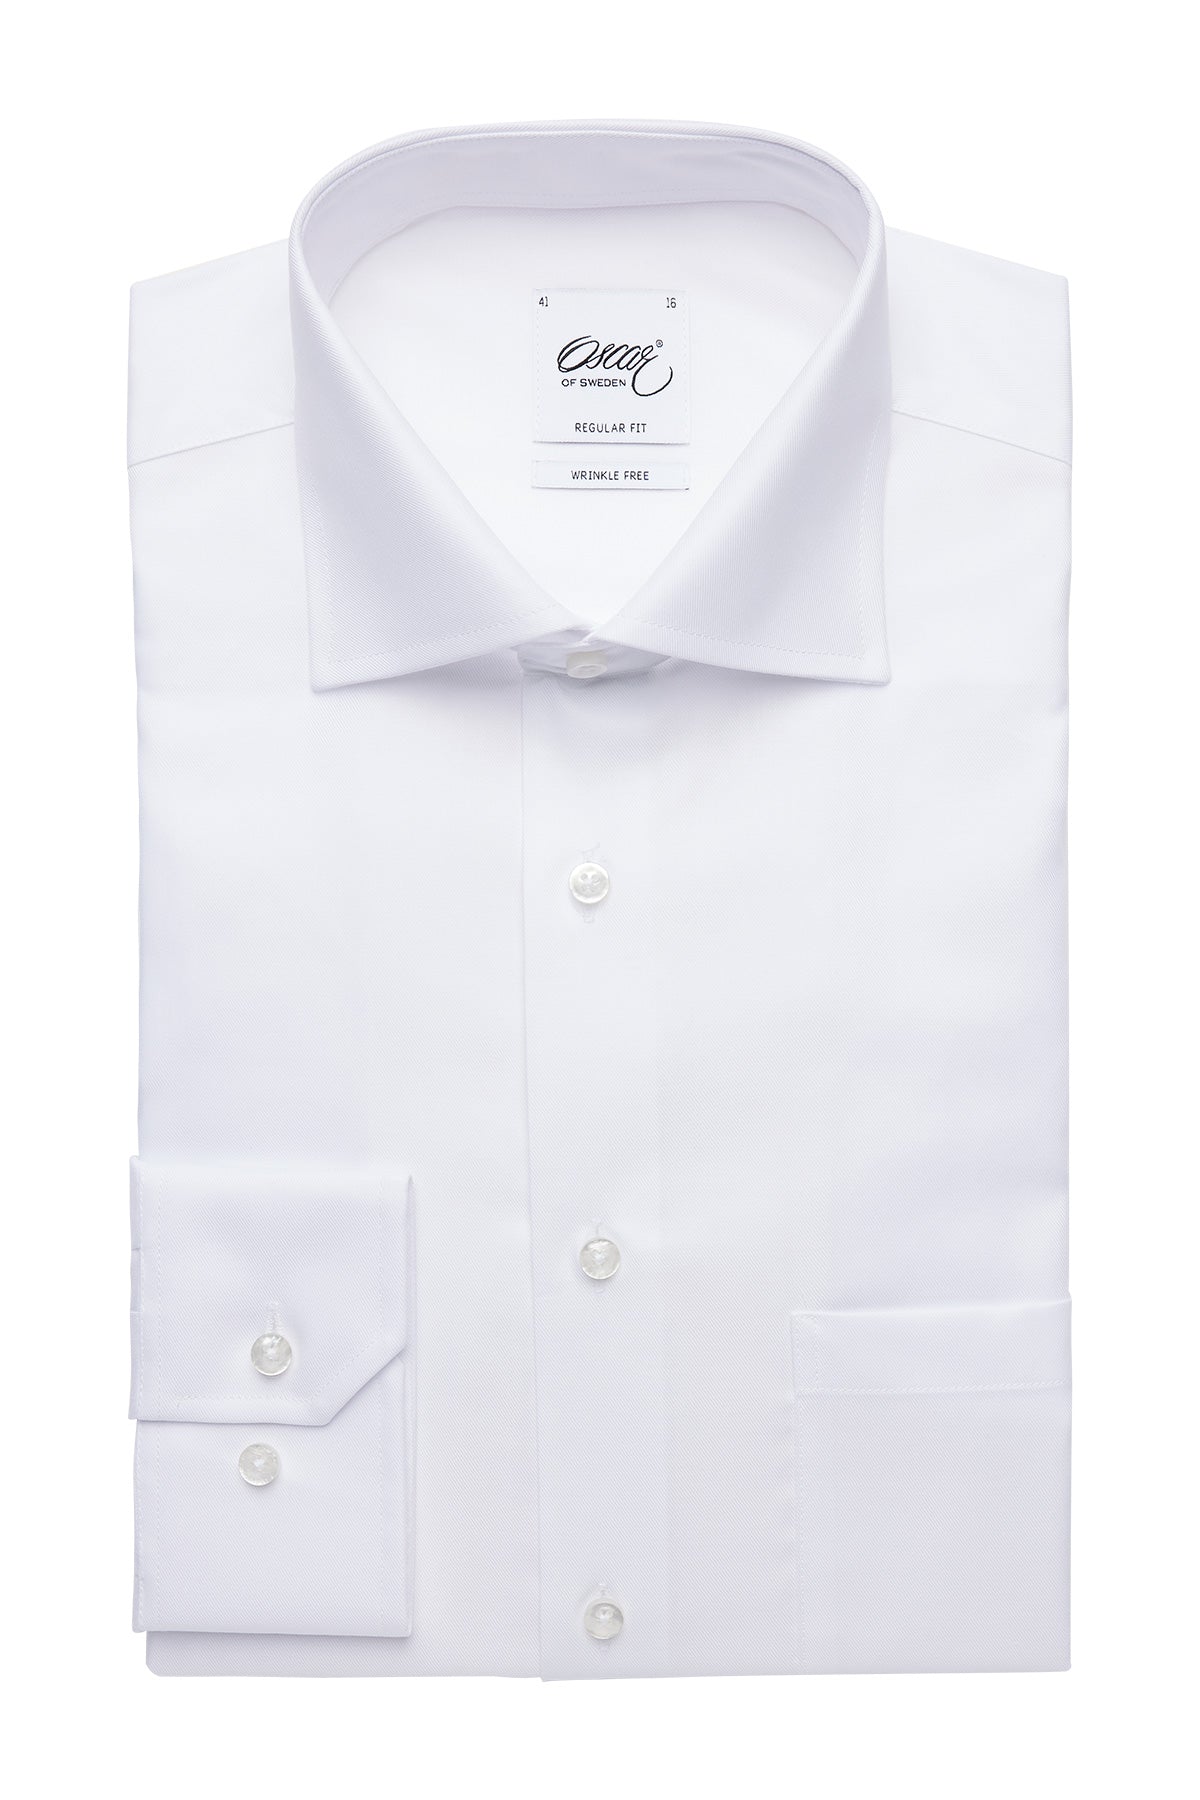 White wrinkle free regular fit shirt